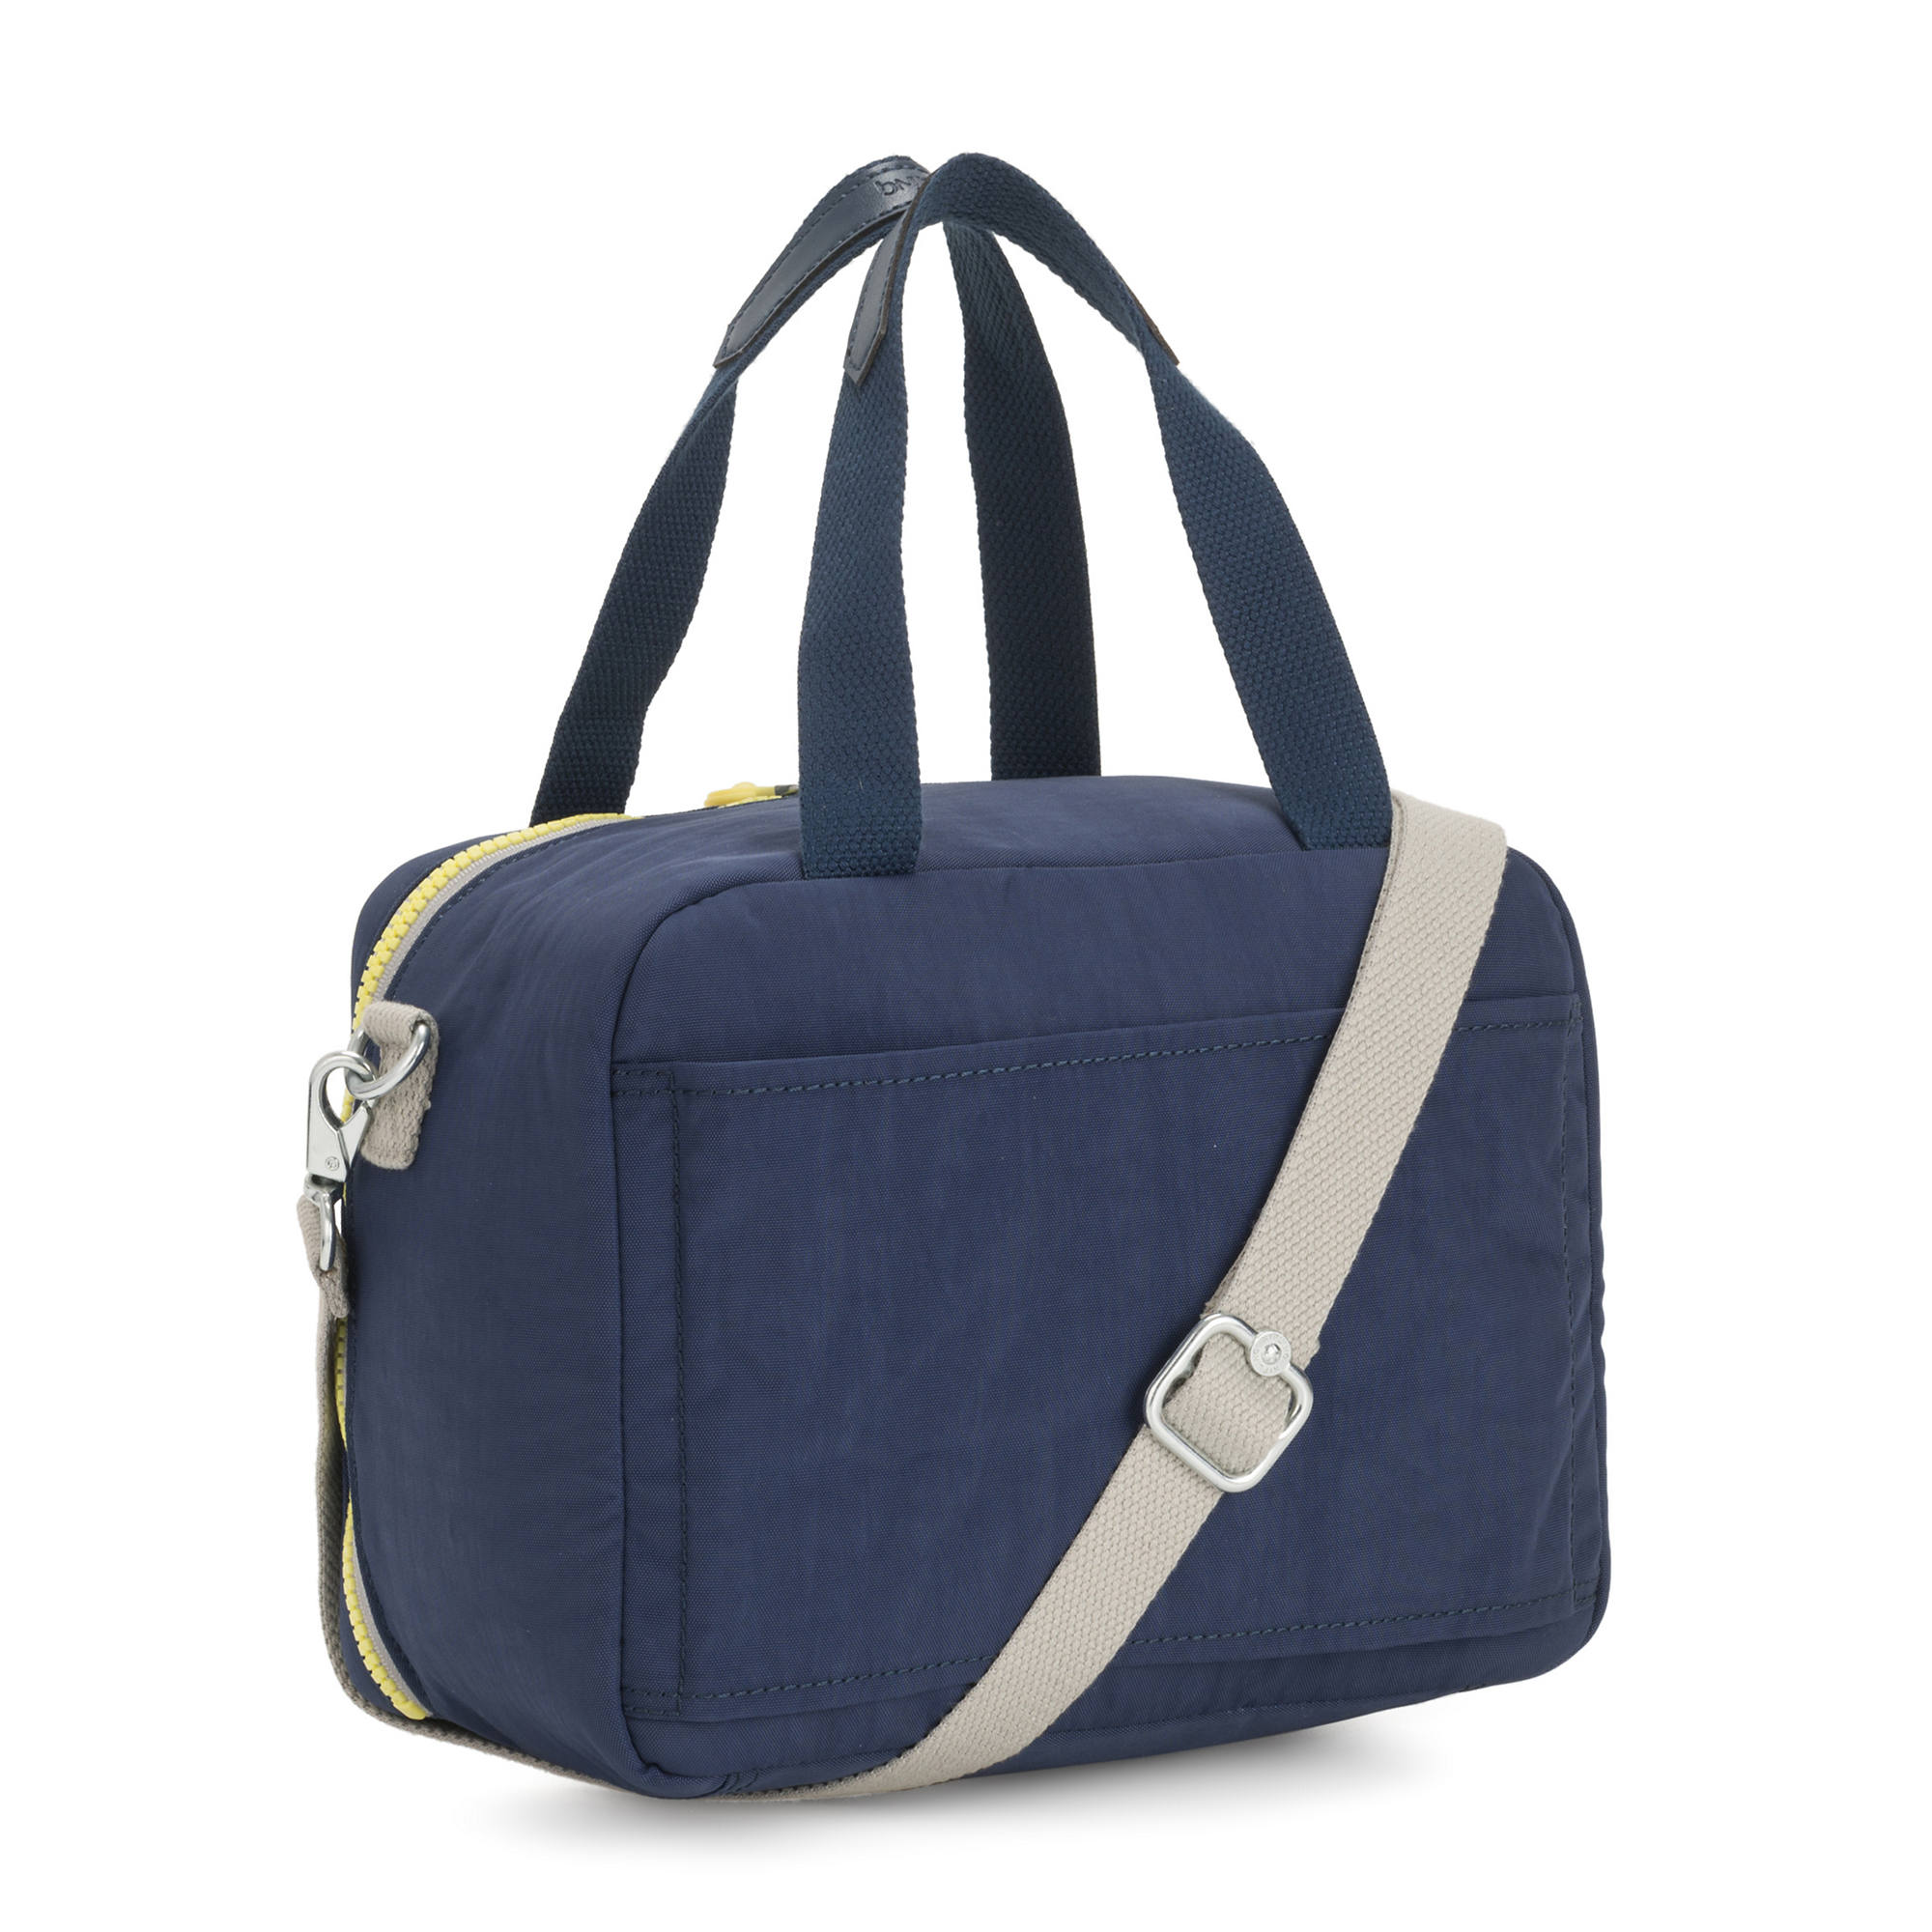 Kipling Miyo Lunch Bag Blue Thunder 882256441093 | eBay